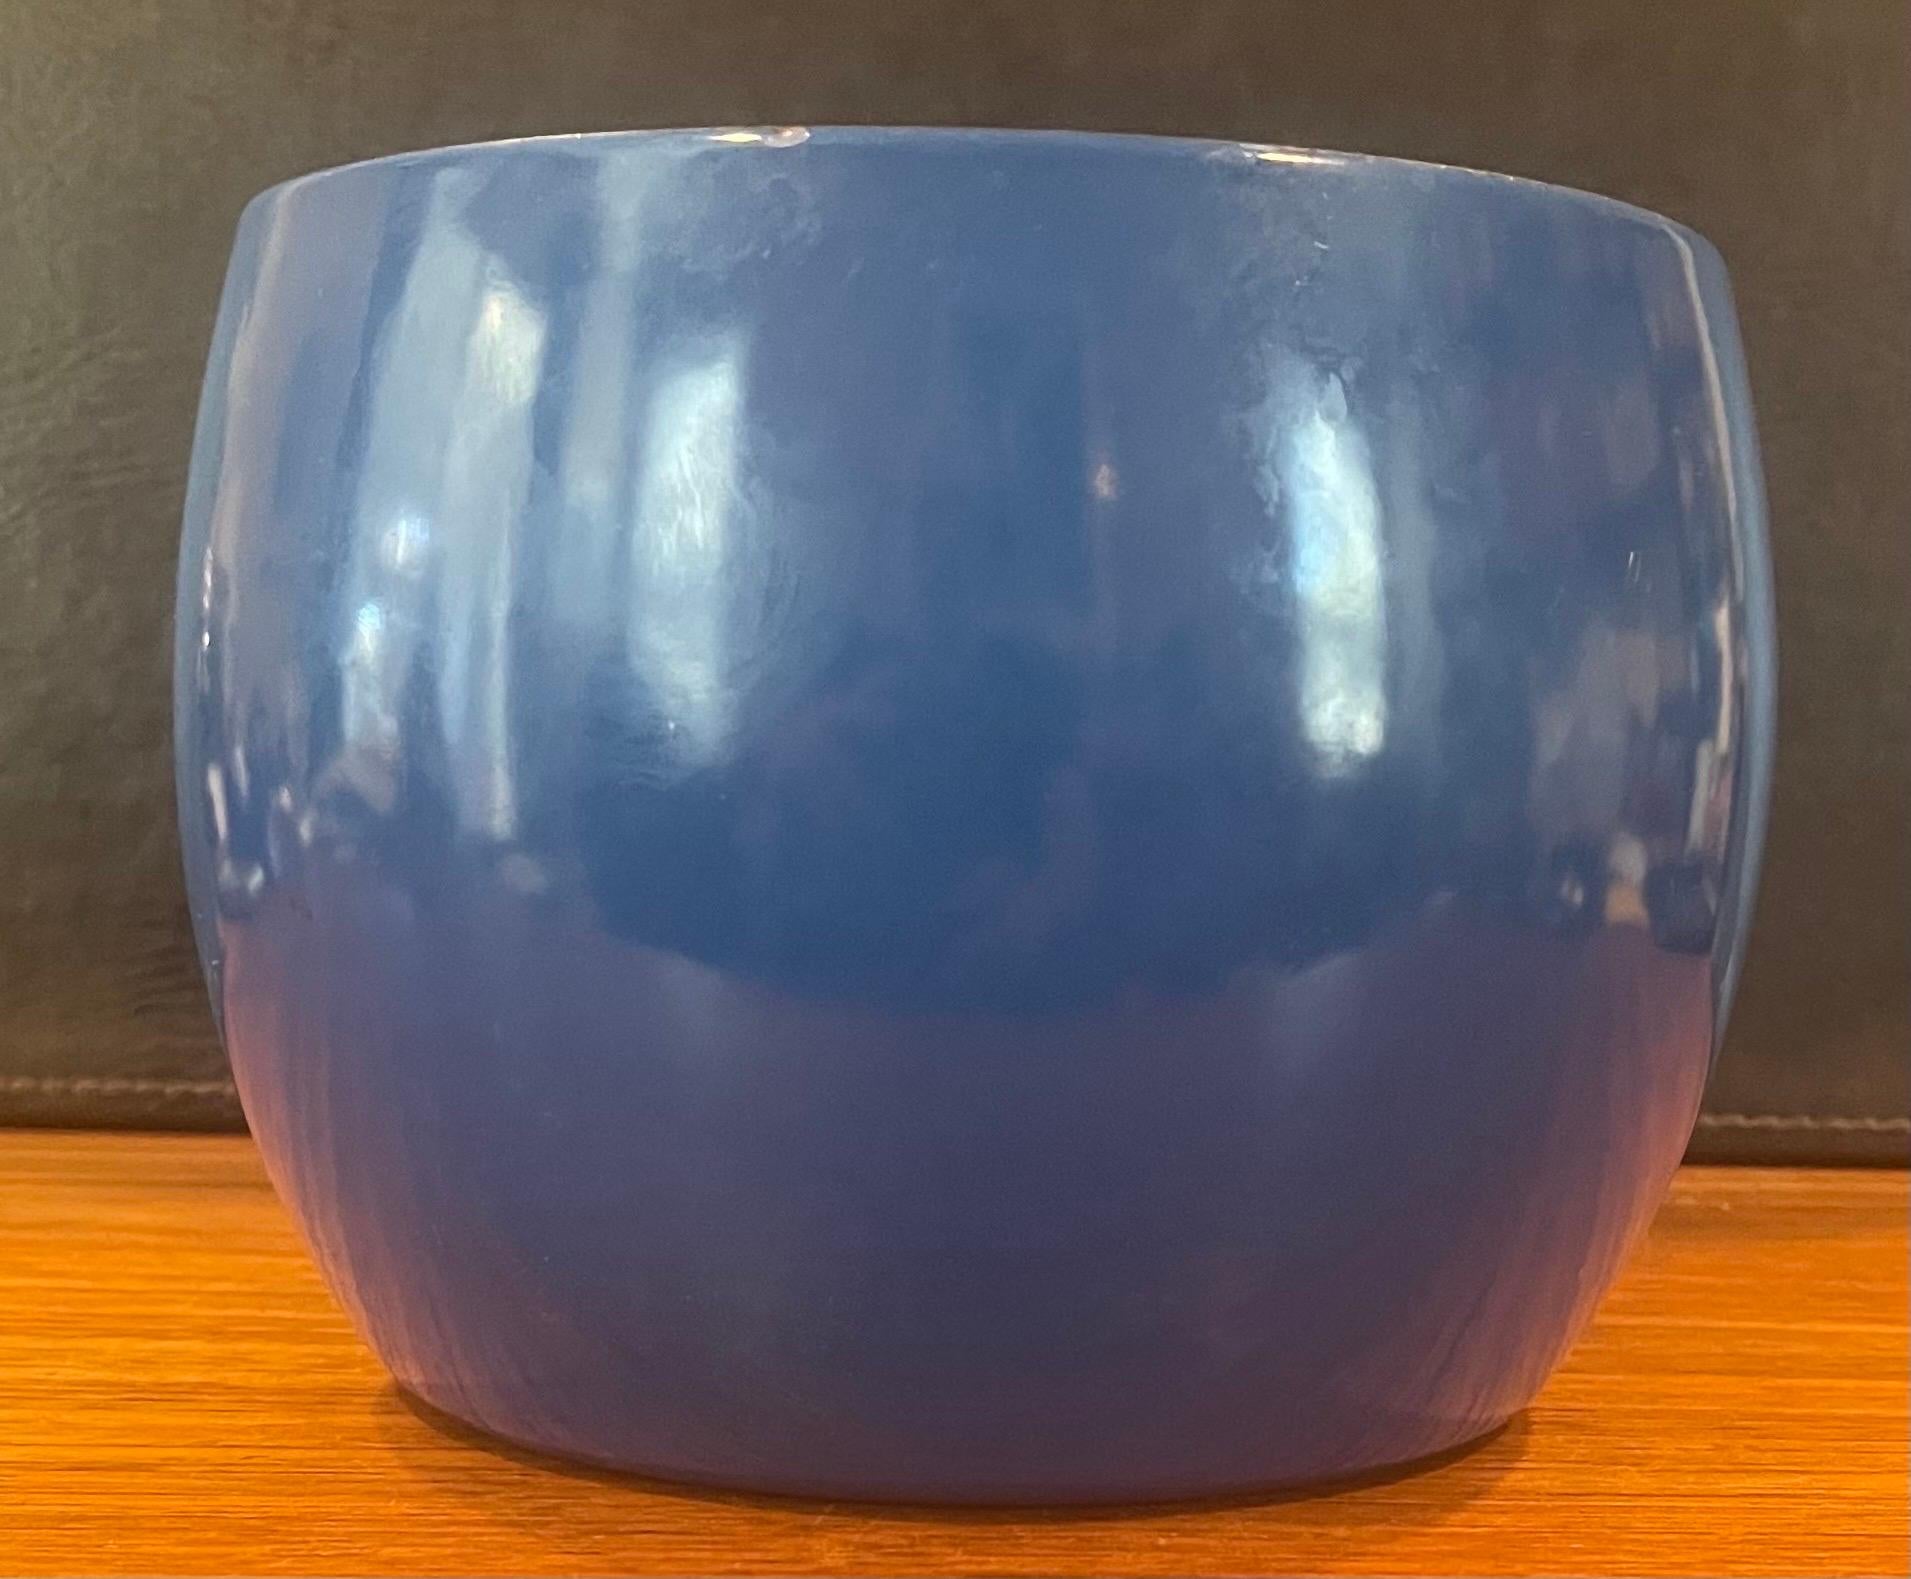 Pair of Danish Modern Blue & White Enamel Bowl by Jens Quistgaard for Dansk For Sale 3